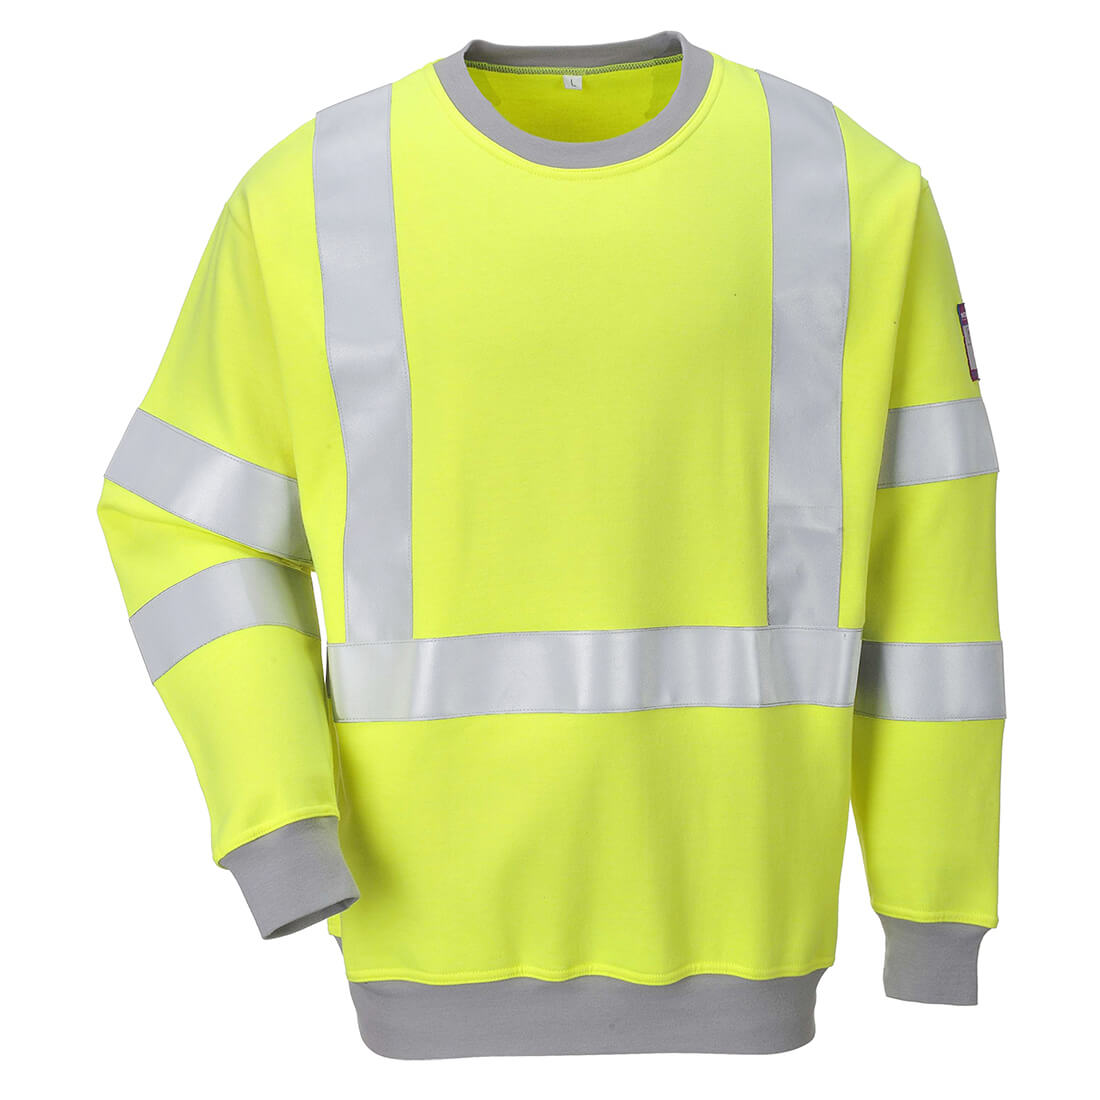 Image of Modaflame Mens Flame Resistant Hi Vis Sweatshirt Yellow 2XL